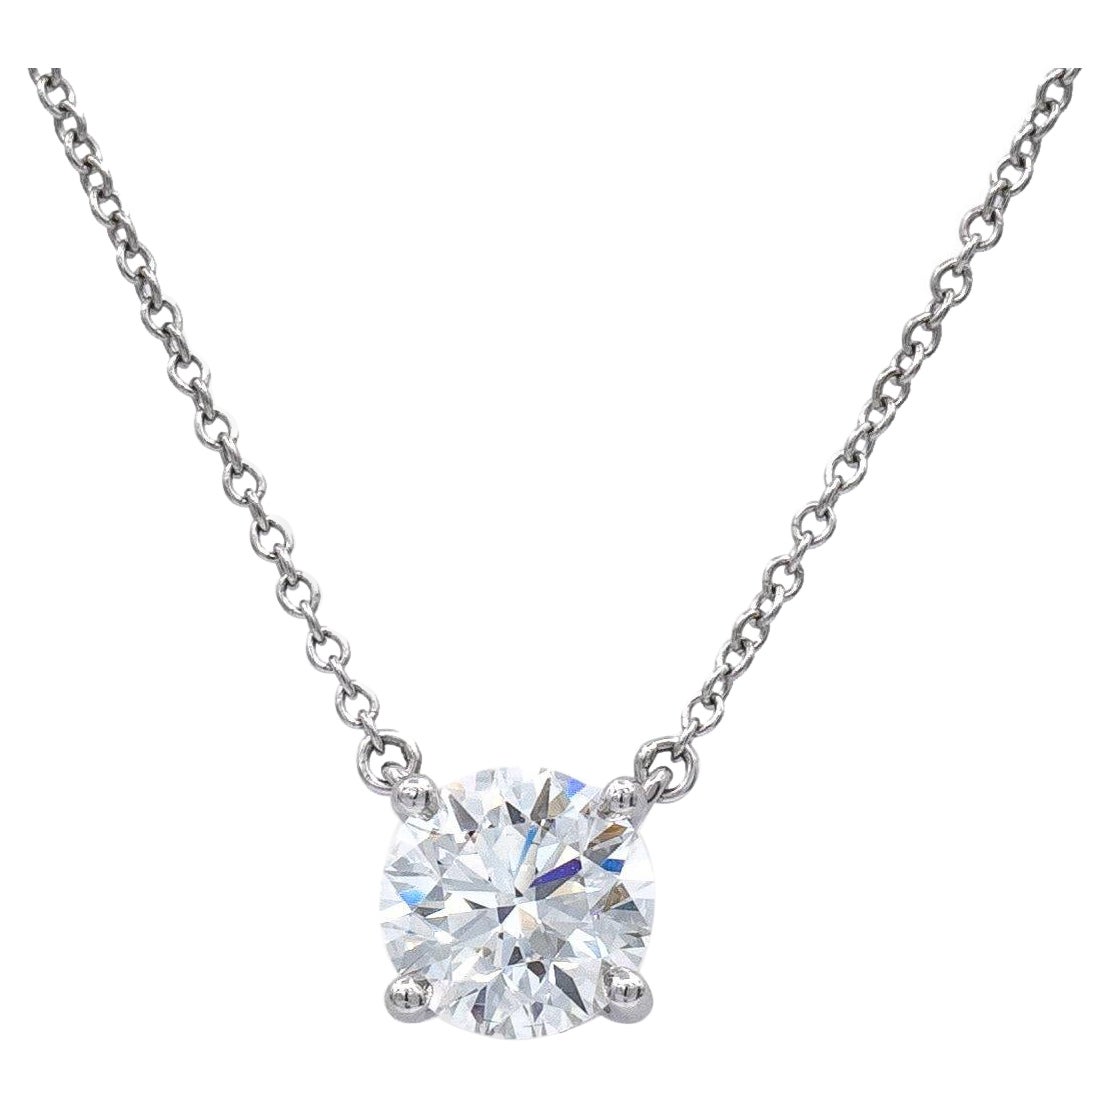 Tiffany & Co. Platinum Round Solitaire Diamond Pendant Necklace 1.41ct GVVS2